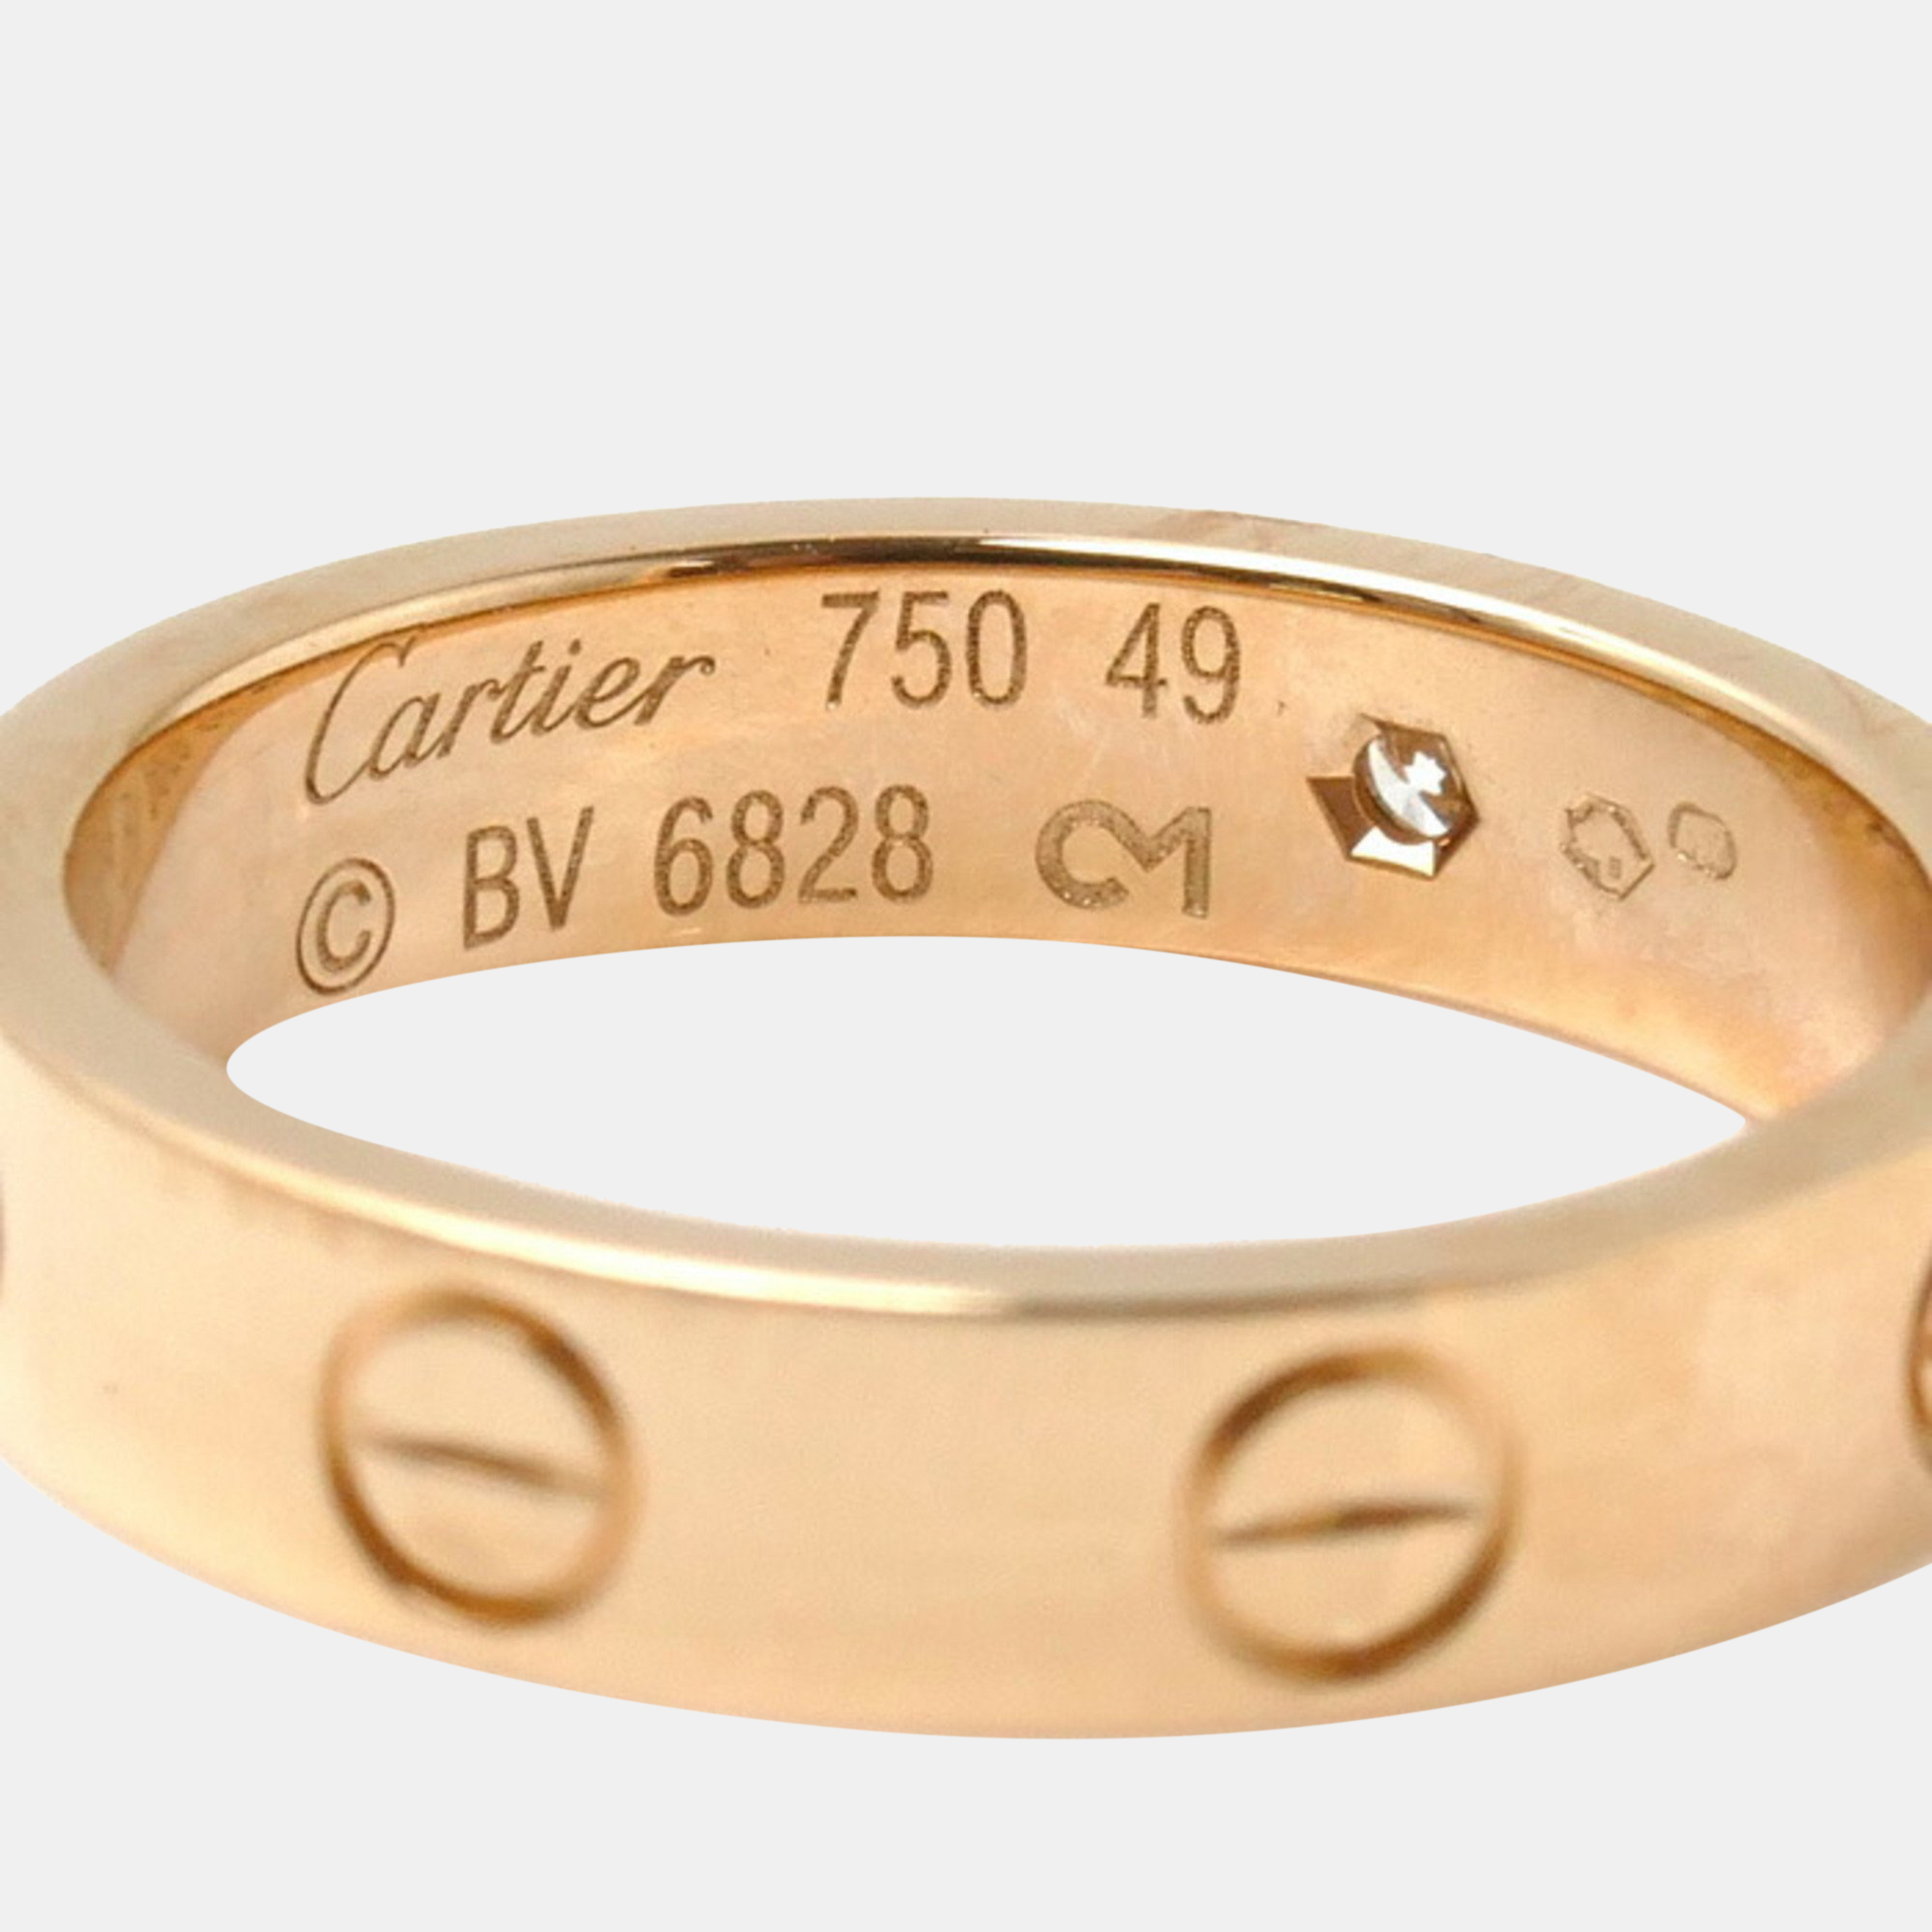 Cartier 18K Rose Gold And 1 Diamond Love Band Ring EU 49